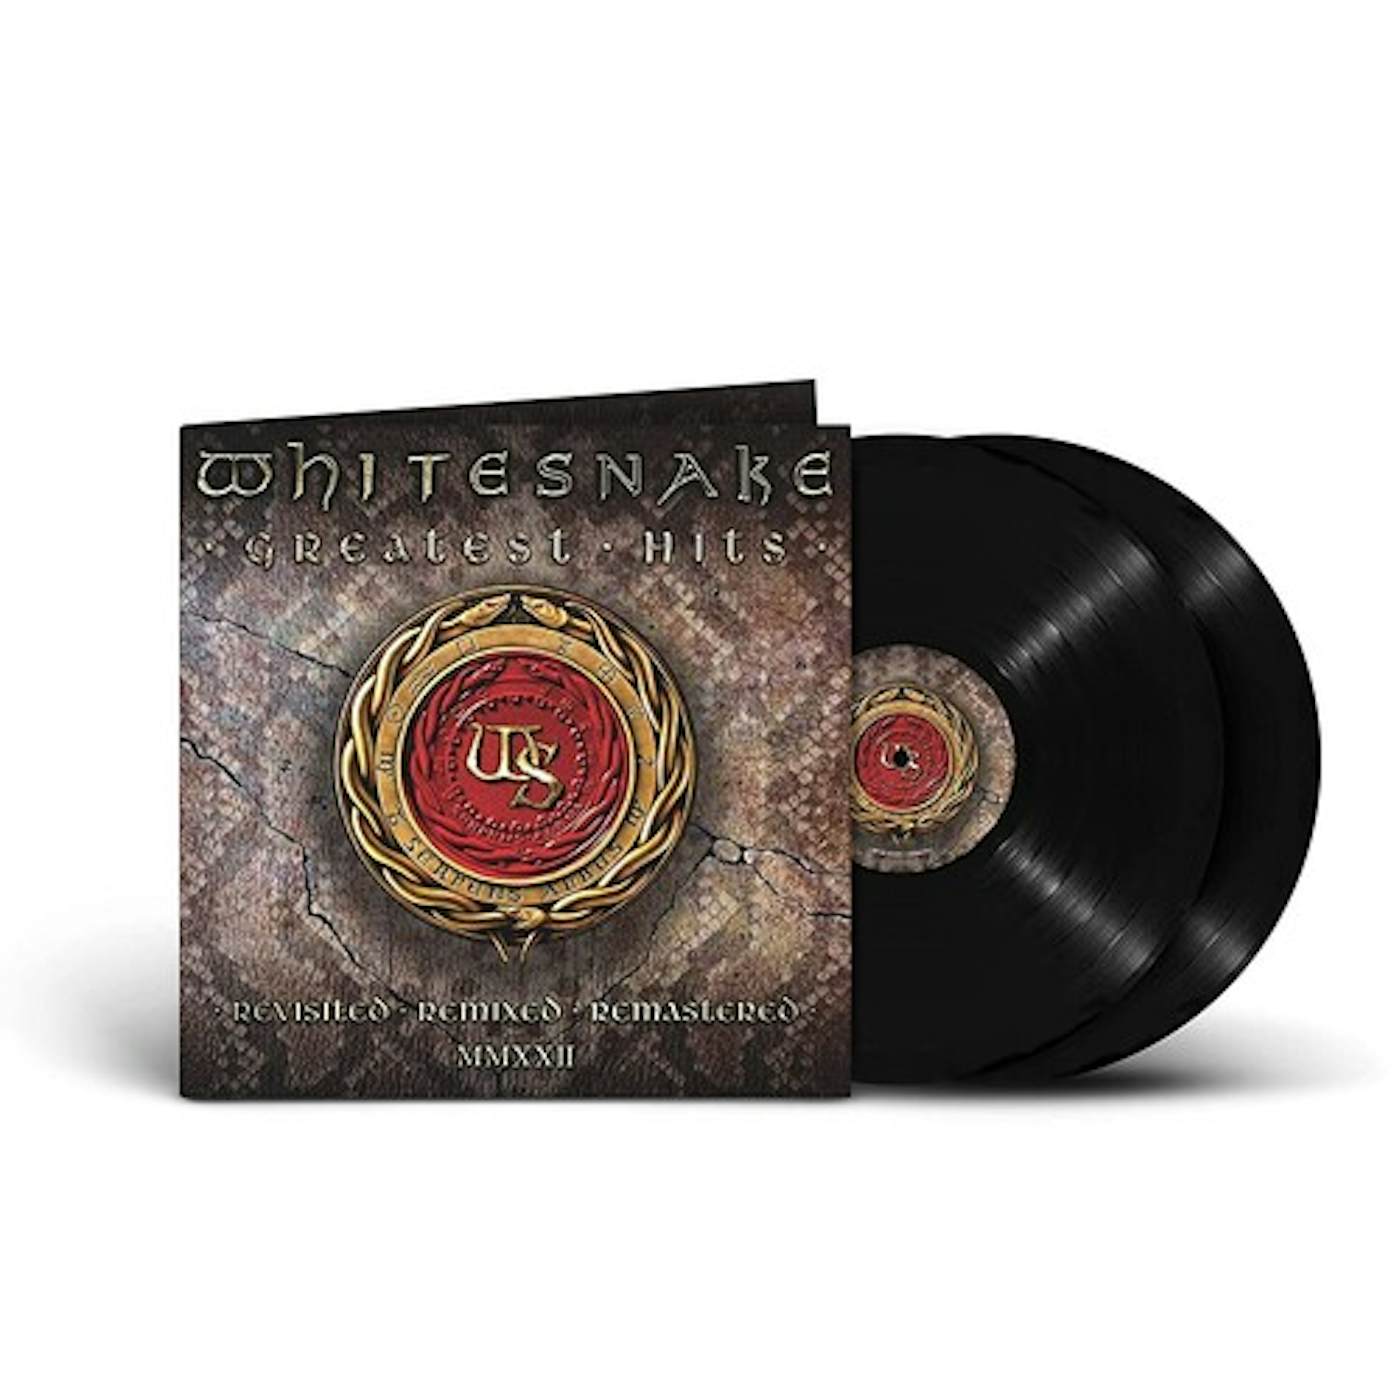 Whitesnake GREATEST HITS Vinyl Record